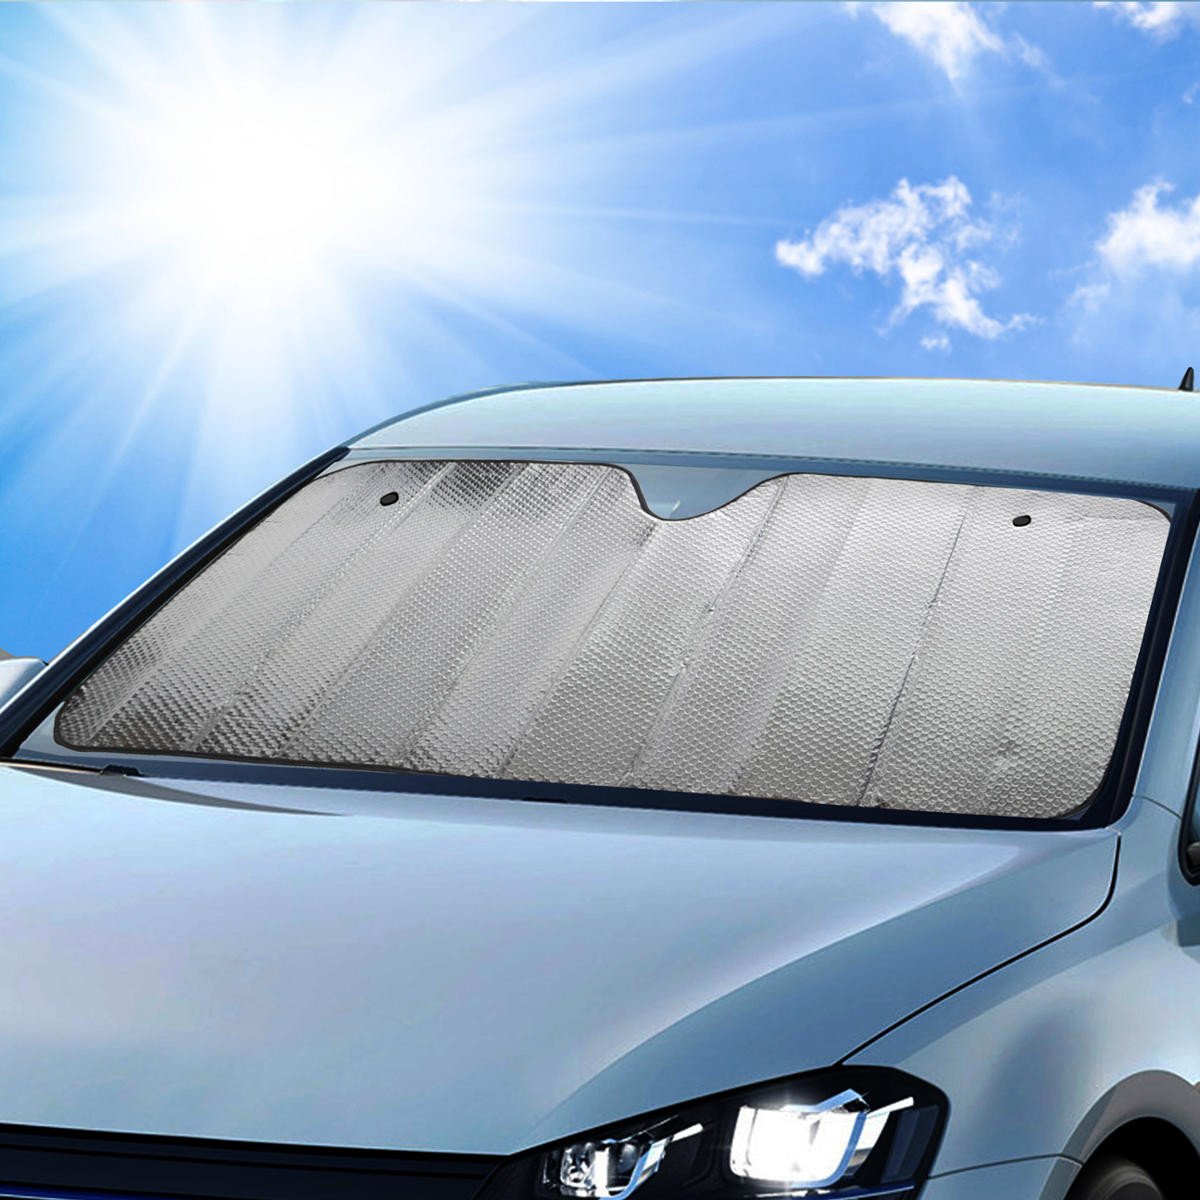 Single Bubble Front Windshield Shade Window Shade- Accordion Folding Auto Sunshade for Car Truck SUV-Blocks UV Rays Sun Visor Protector-Keeps Your Vehicle Cool